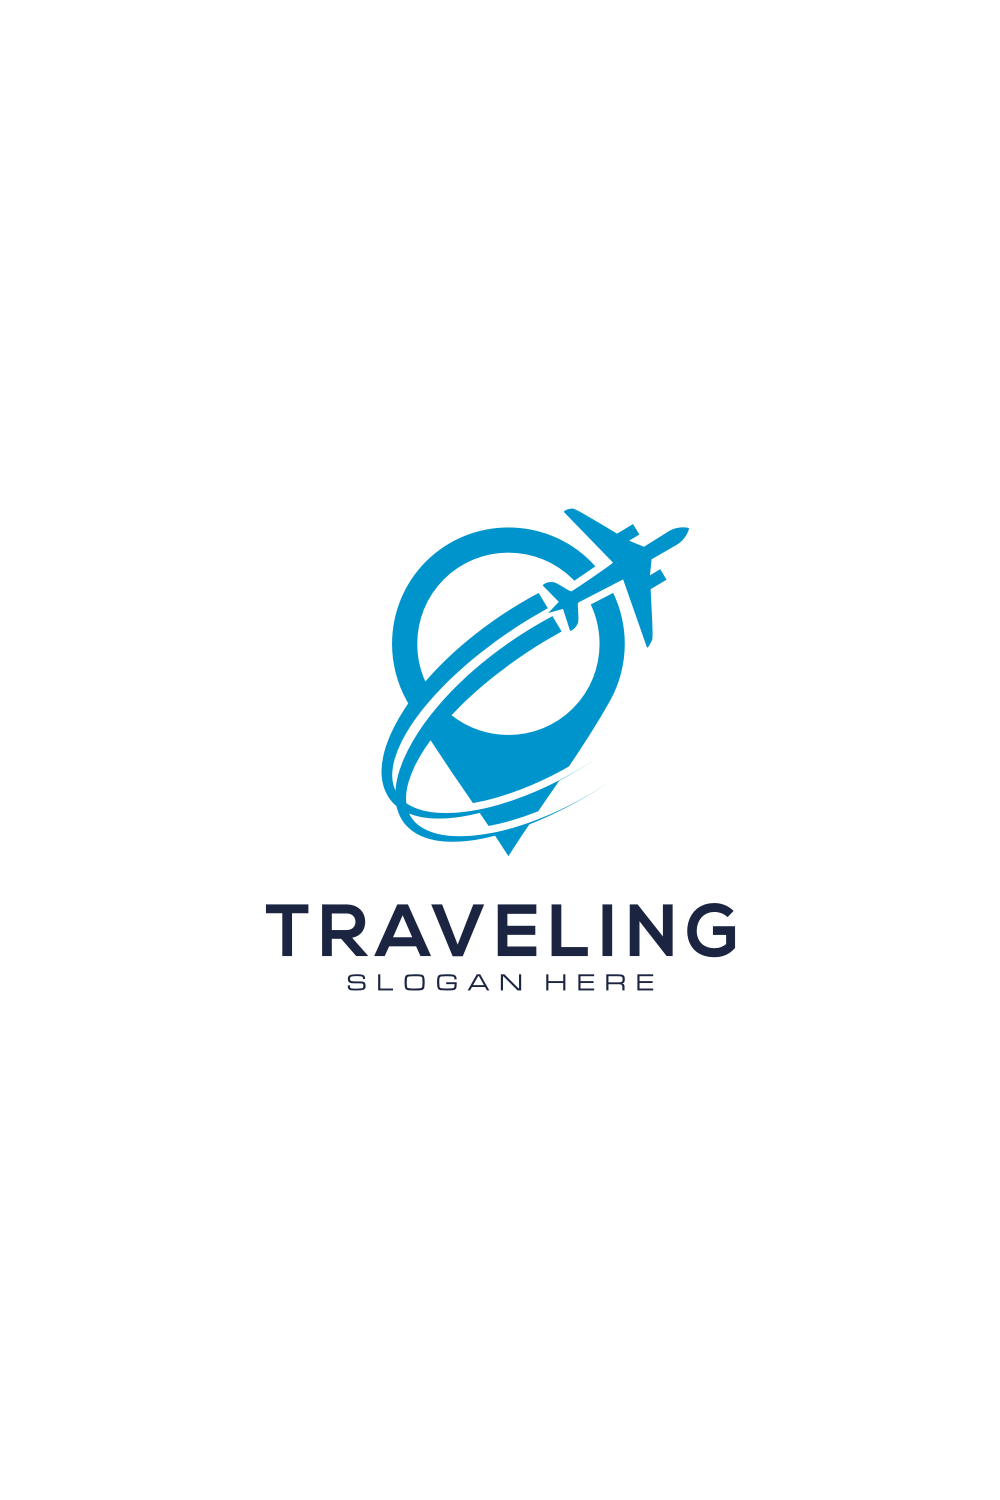 travel logo with pin shape - MasterBundles